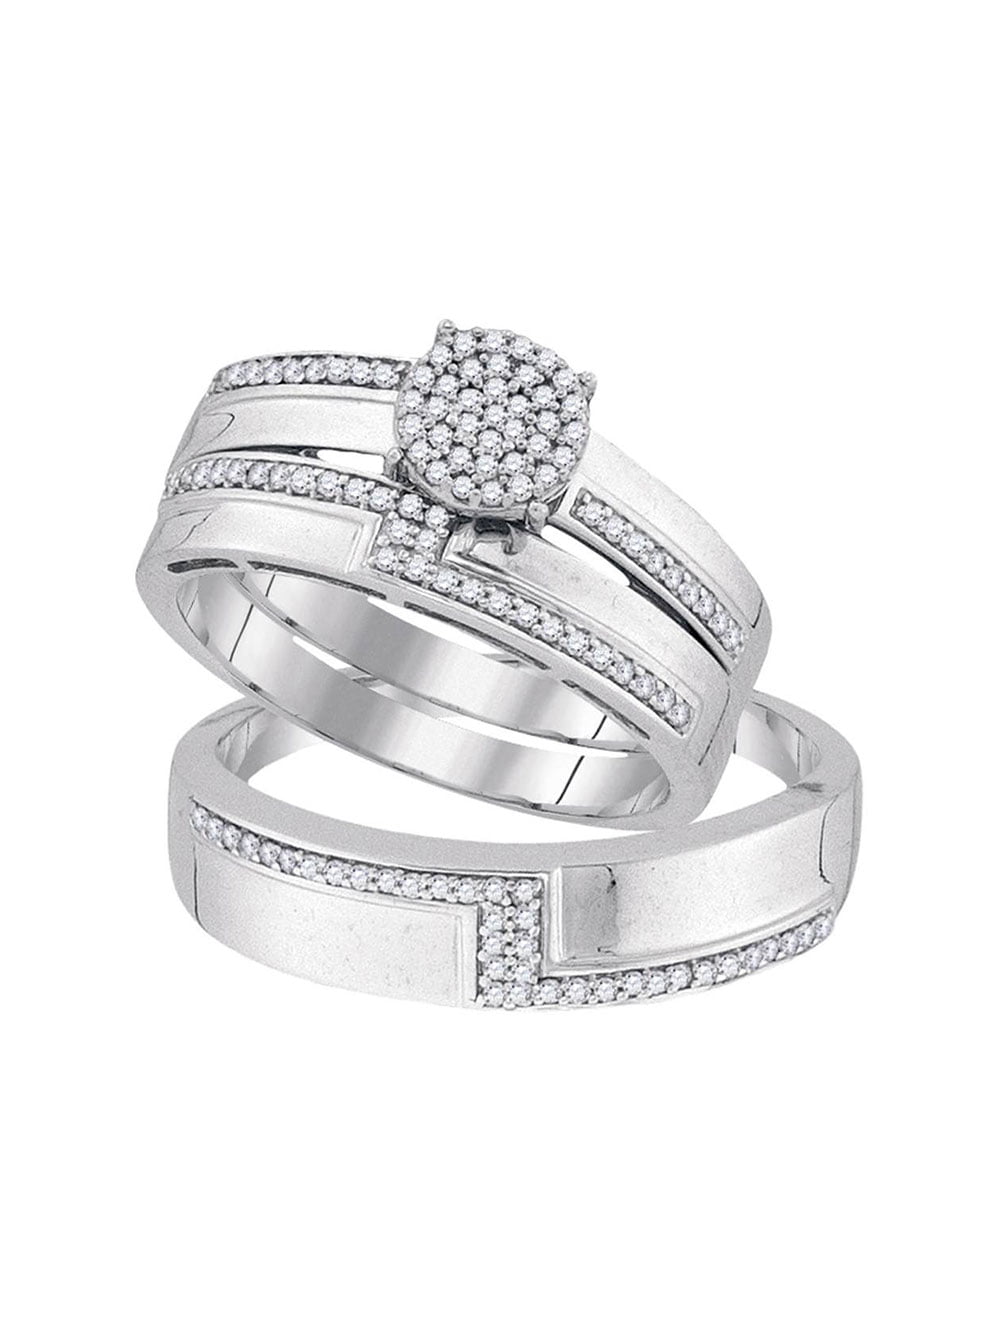 Details about   10k White Gold Over Princess Diamond Cut Engagement Wedding Band Bridal Ring Set 